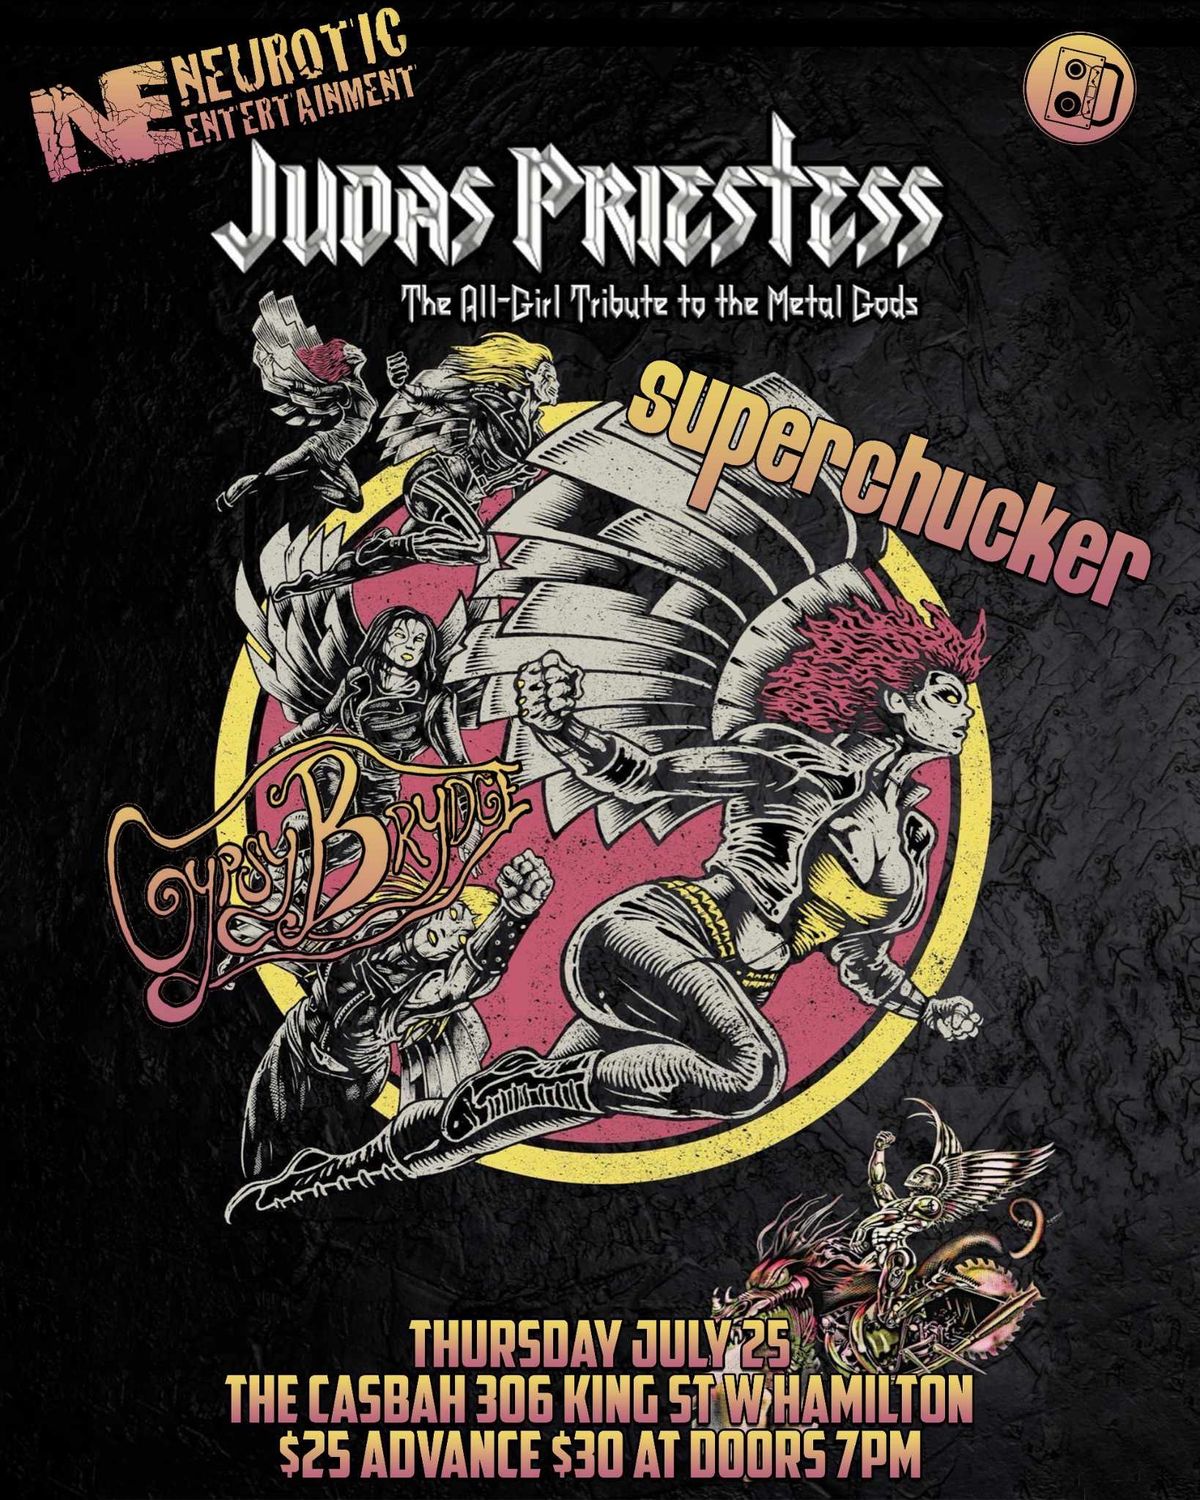 Judas Priestess wsg Superchucker & Gypsy Brydge  